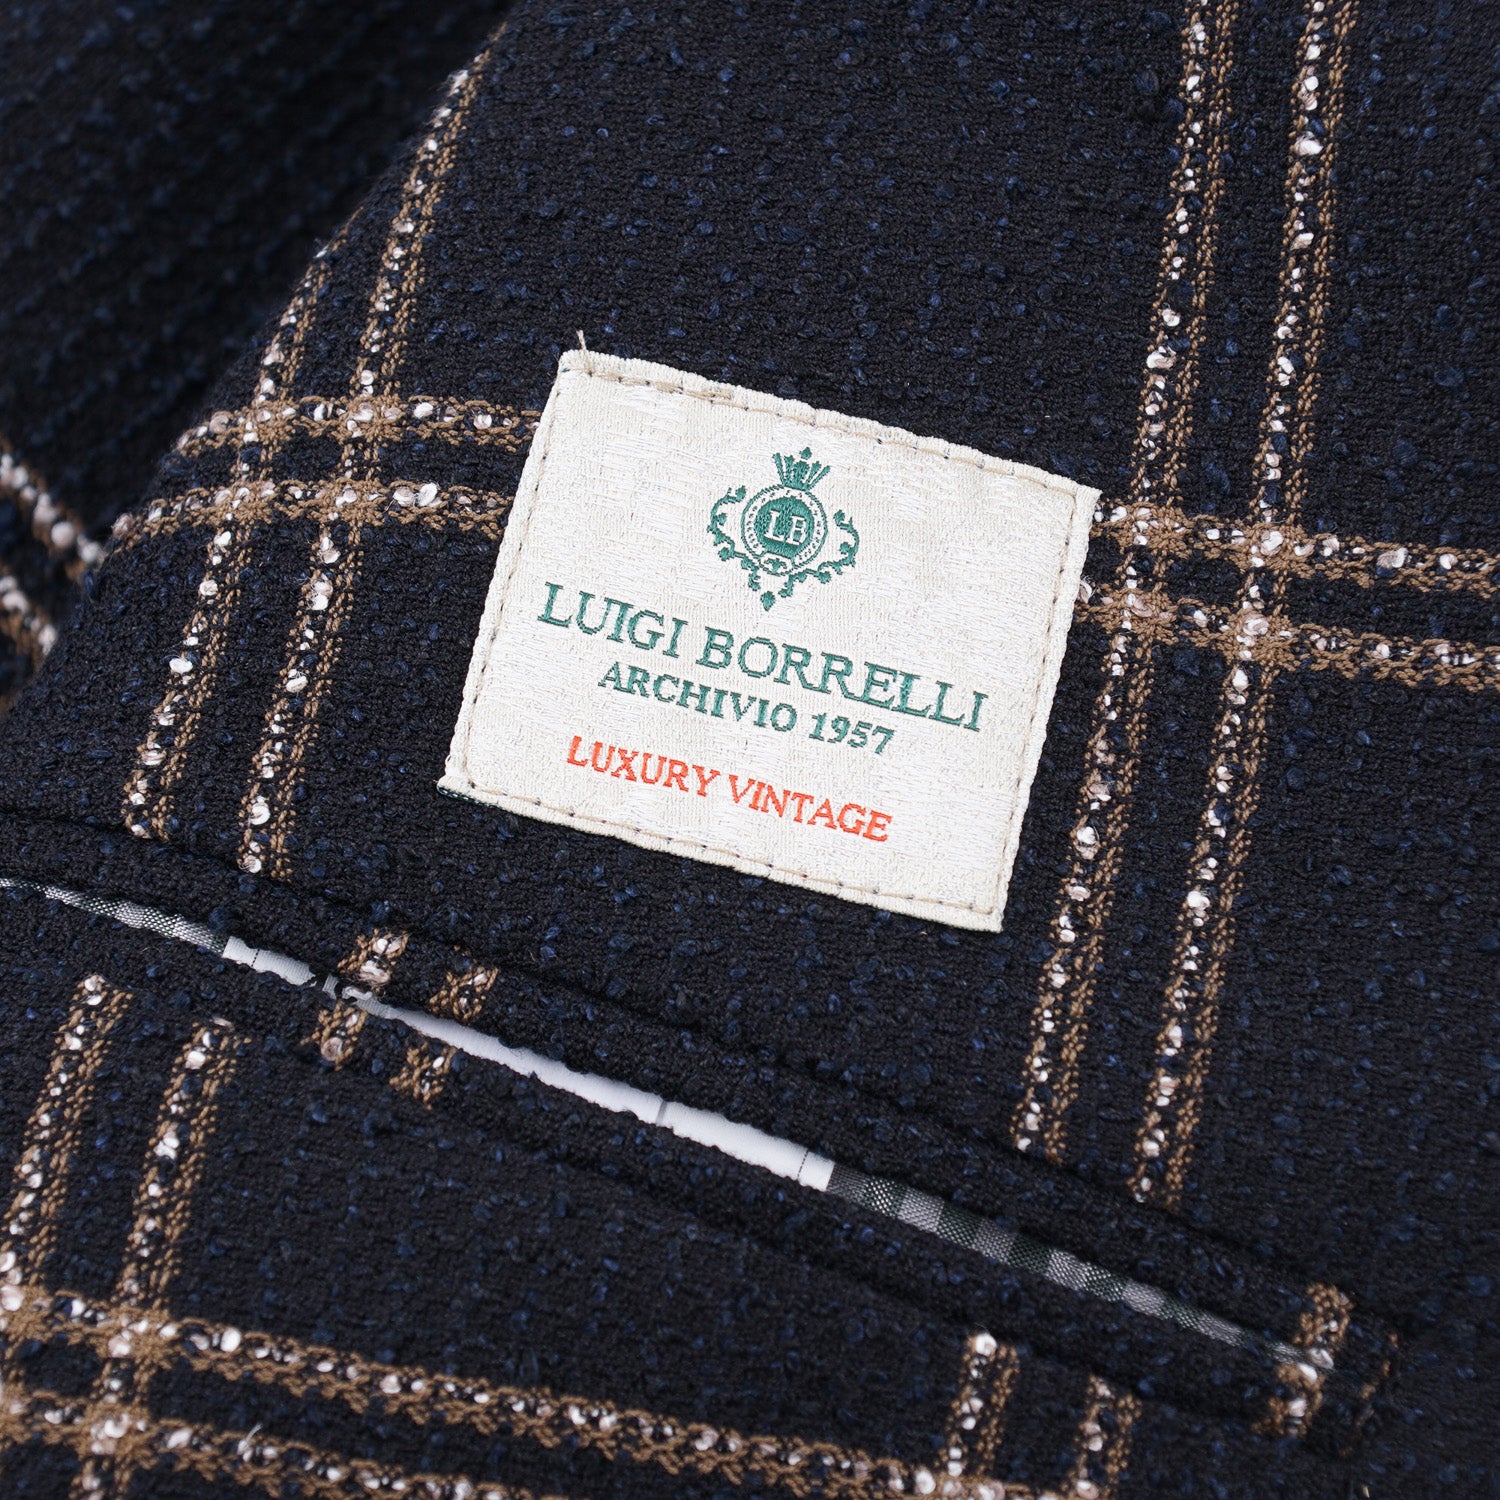 Luigi Borrelli Cotton and Linen Sport Coat - Top Shelf Apparel